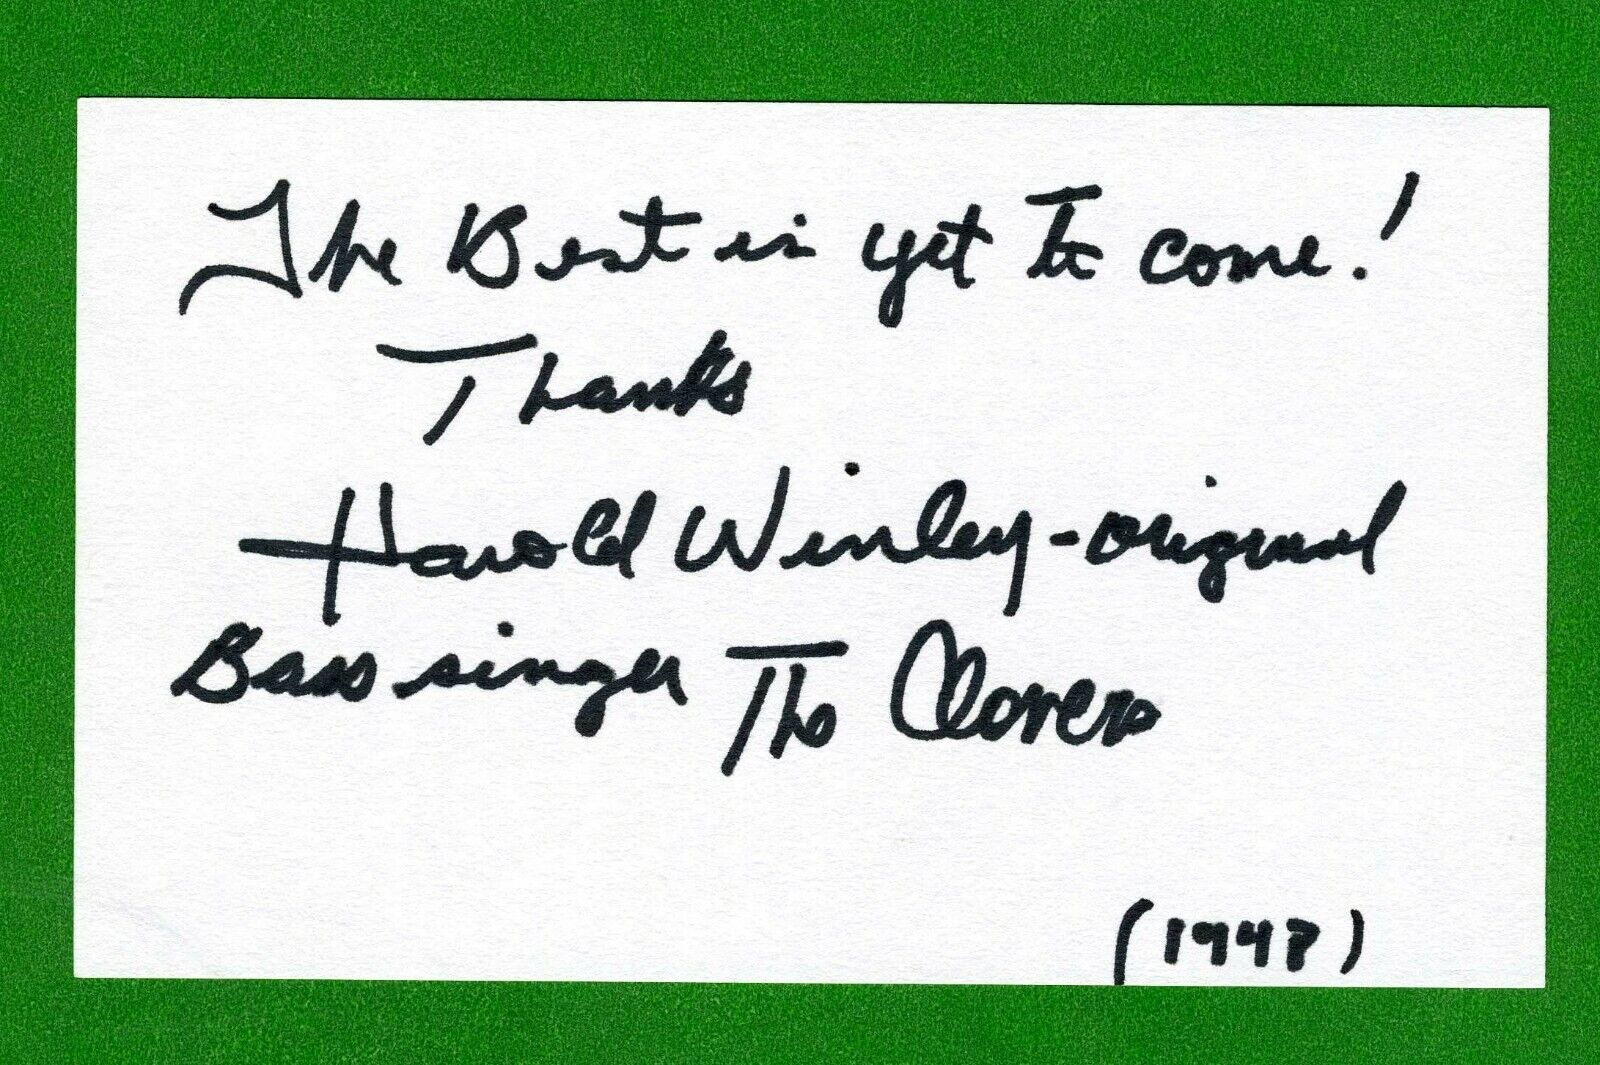 Harold Winley Original Bass Singer \'The Clovers\' signed 3x5 Index Card C17187